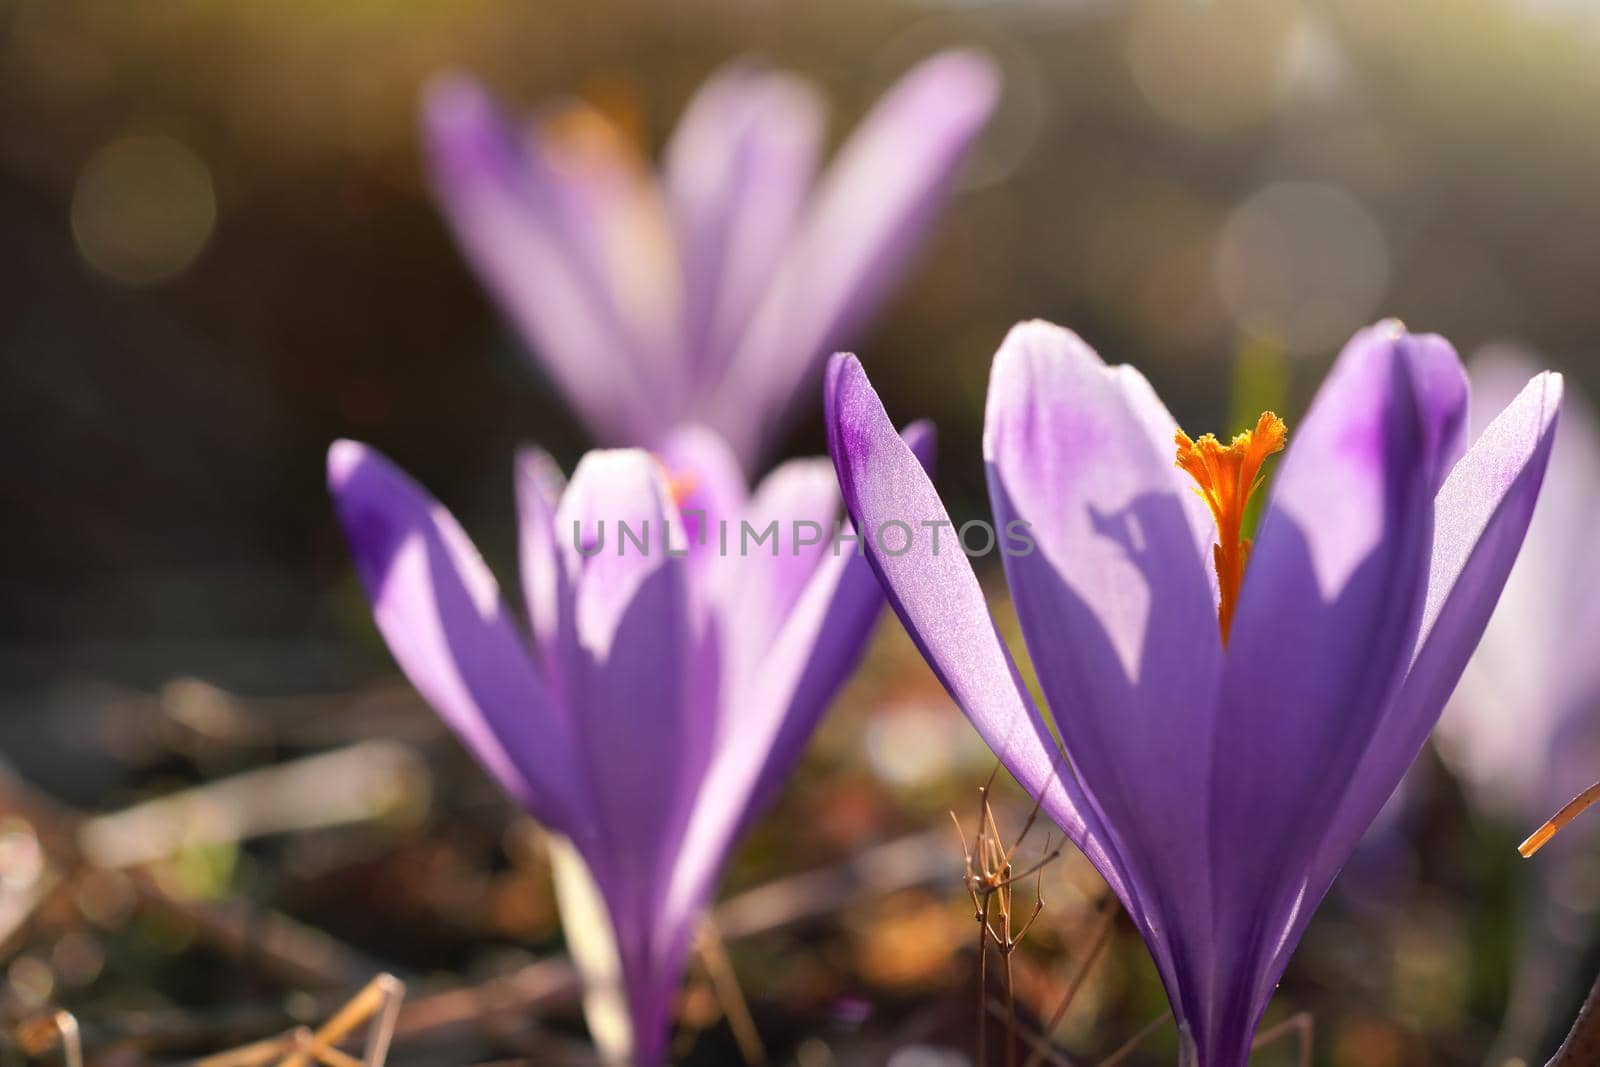 Sun shines through petals of wild purple and yellow flower Crocus heuffelianus discolor growing in spring dry grass.